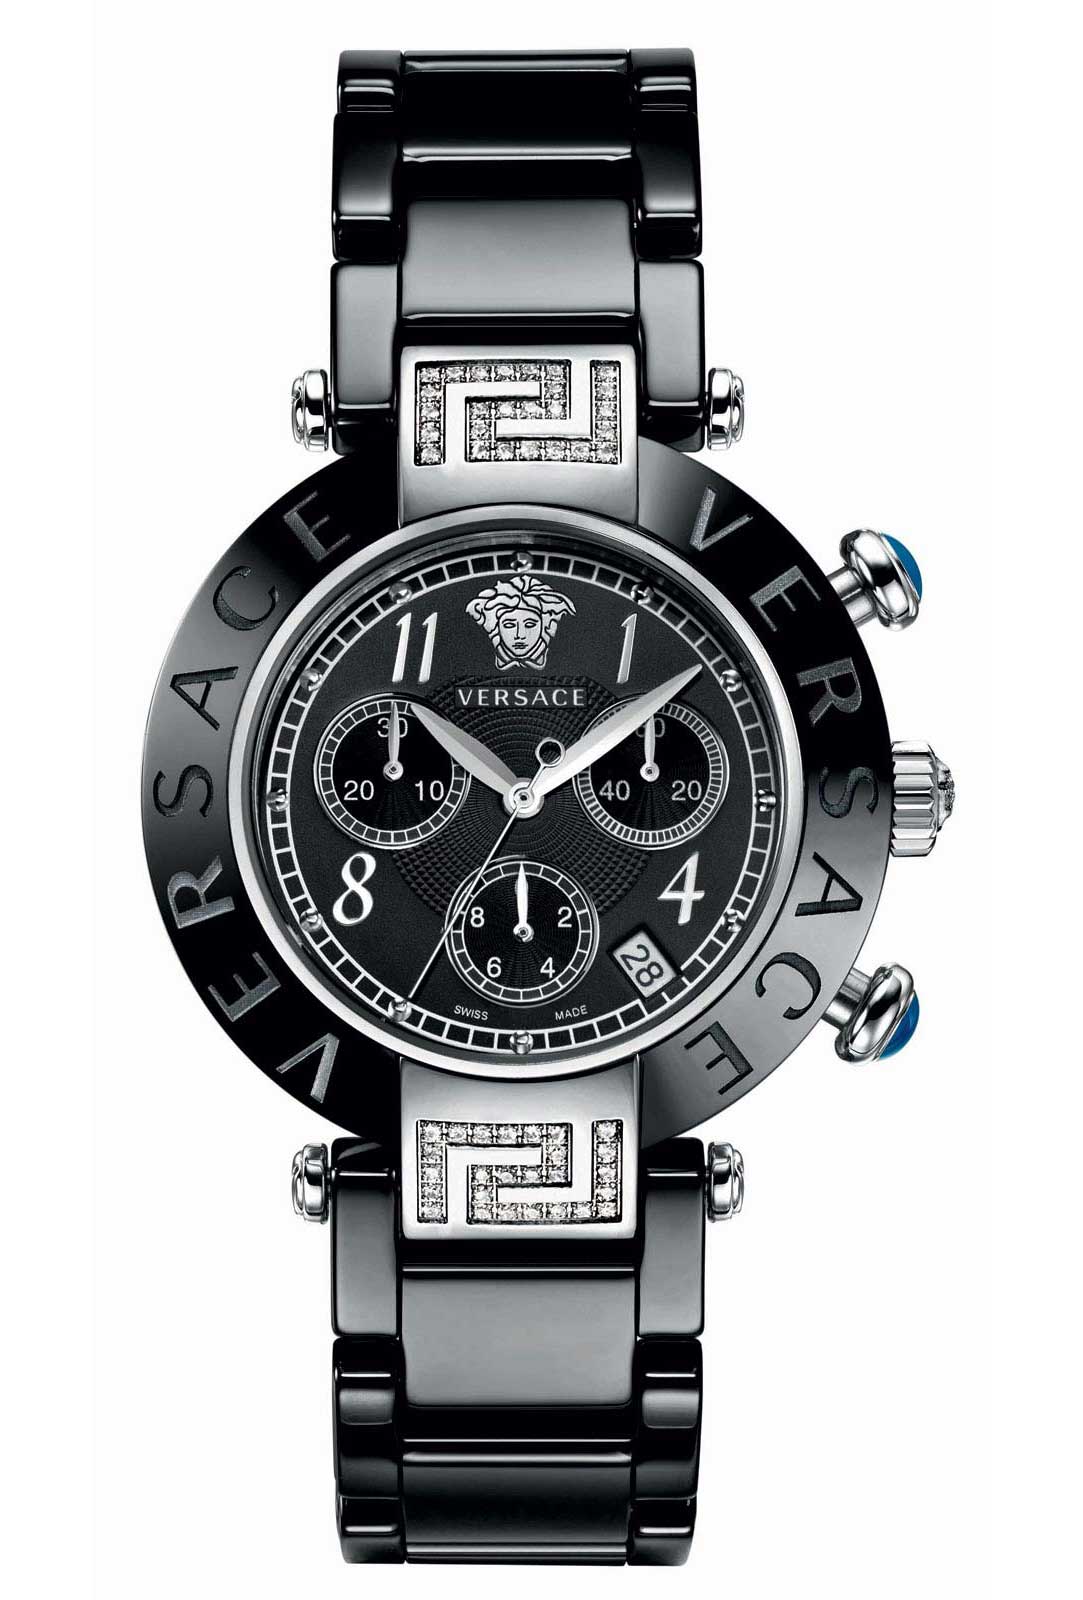 Versace QUARTZ CHRONO watch 5040D STEEL